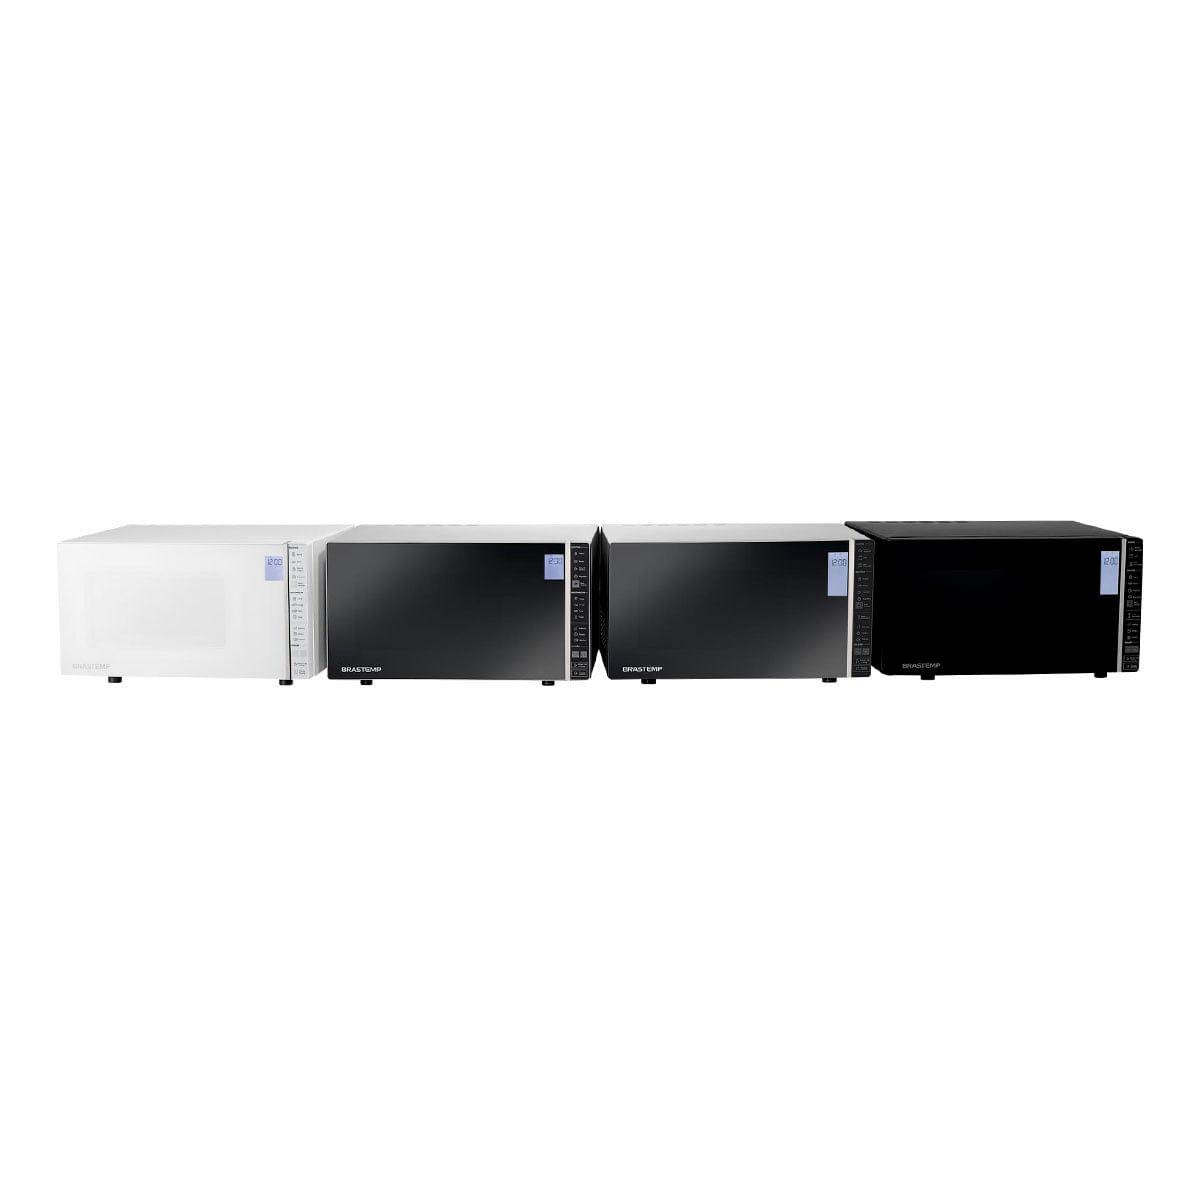 MV10897658_Microondas-Brastemp-32-Litros-Display-LCD-Funcao-Grill-Receitas-Pre-programadas-BMG45AE-Preto_8_Zoom